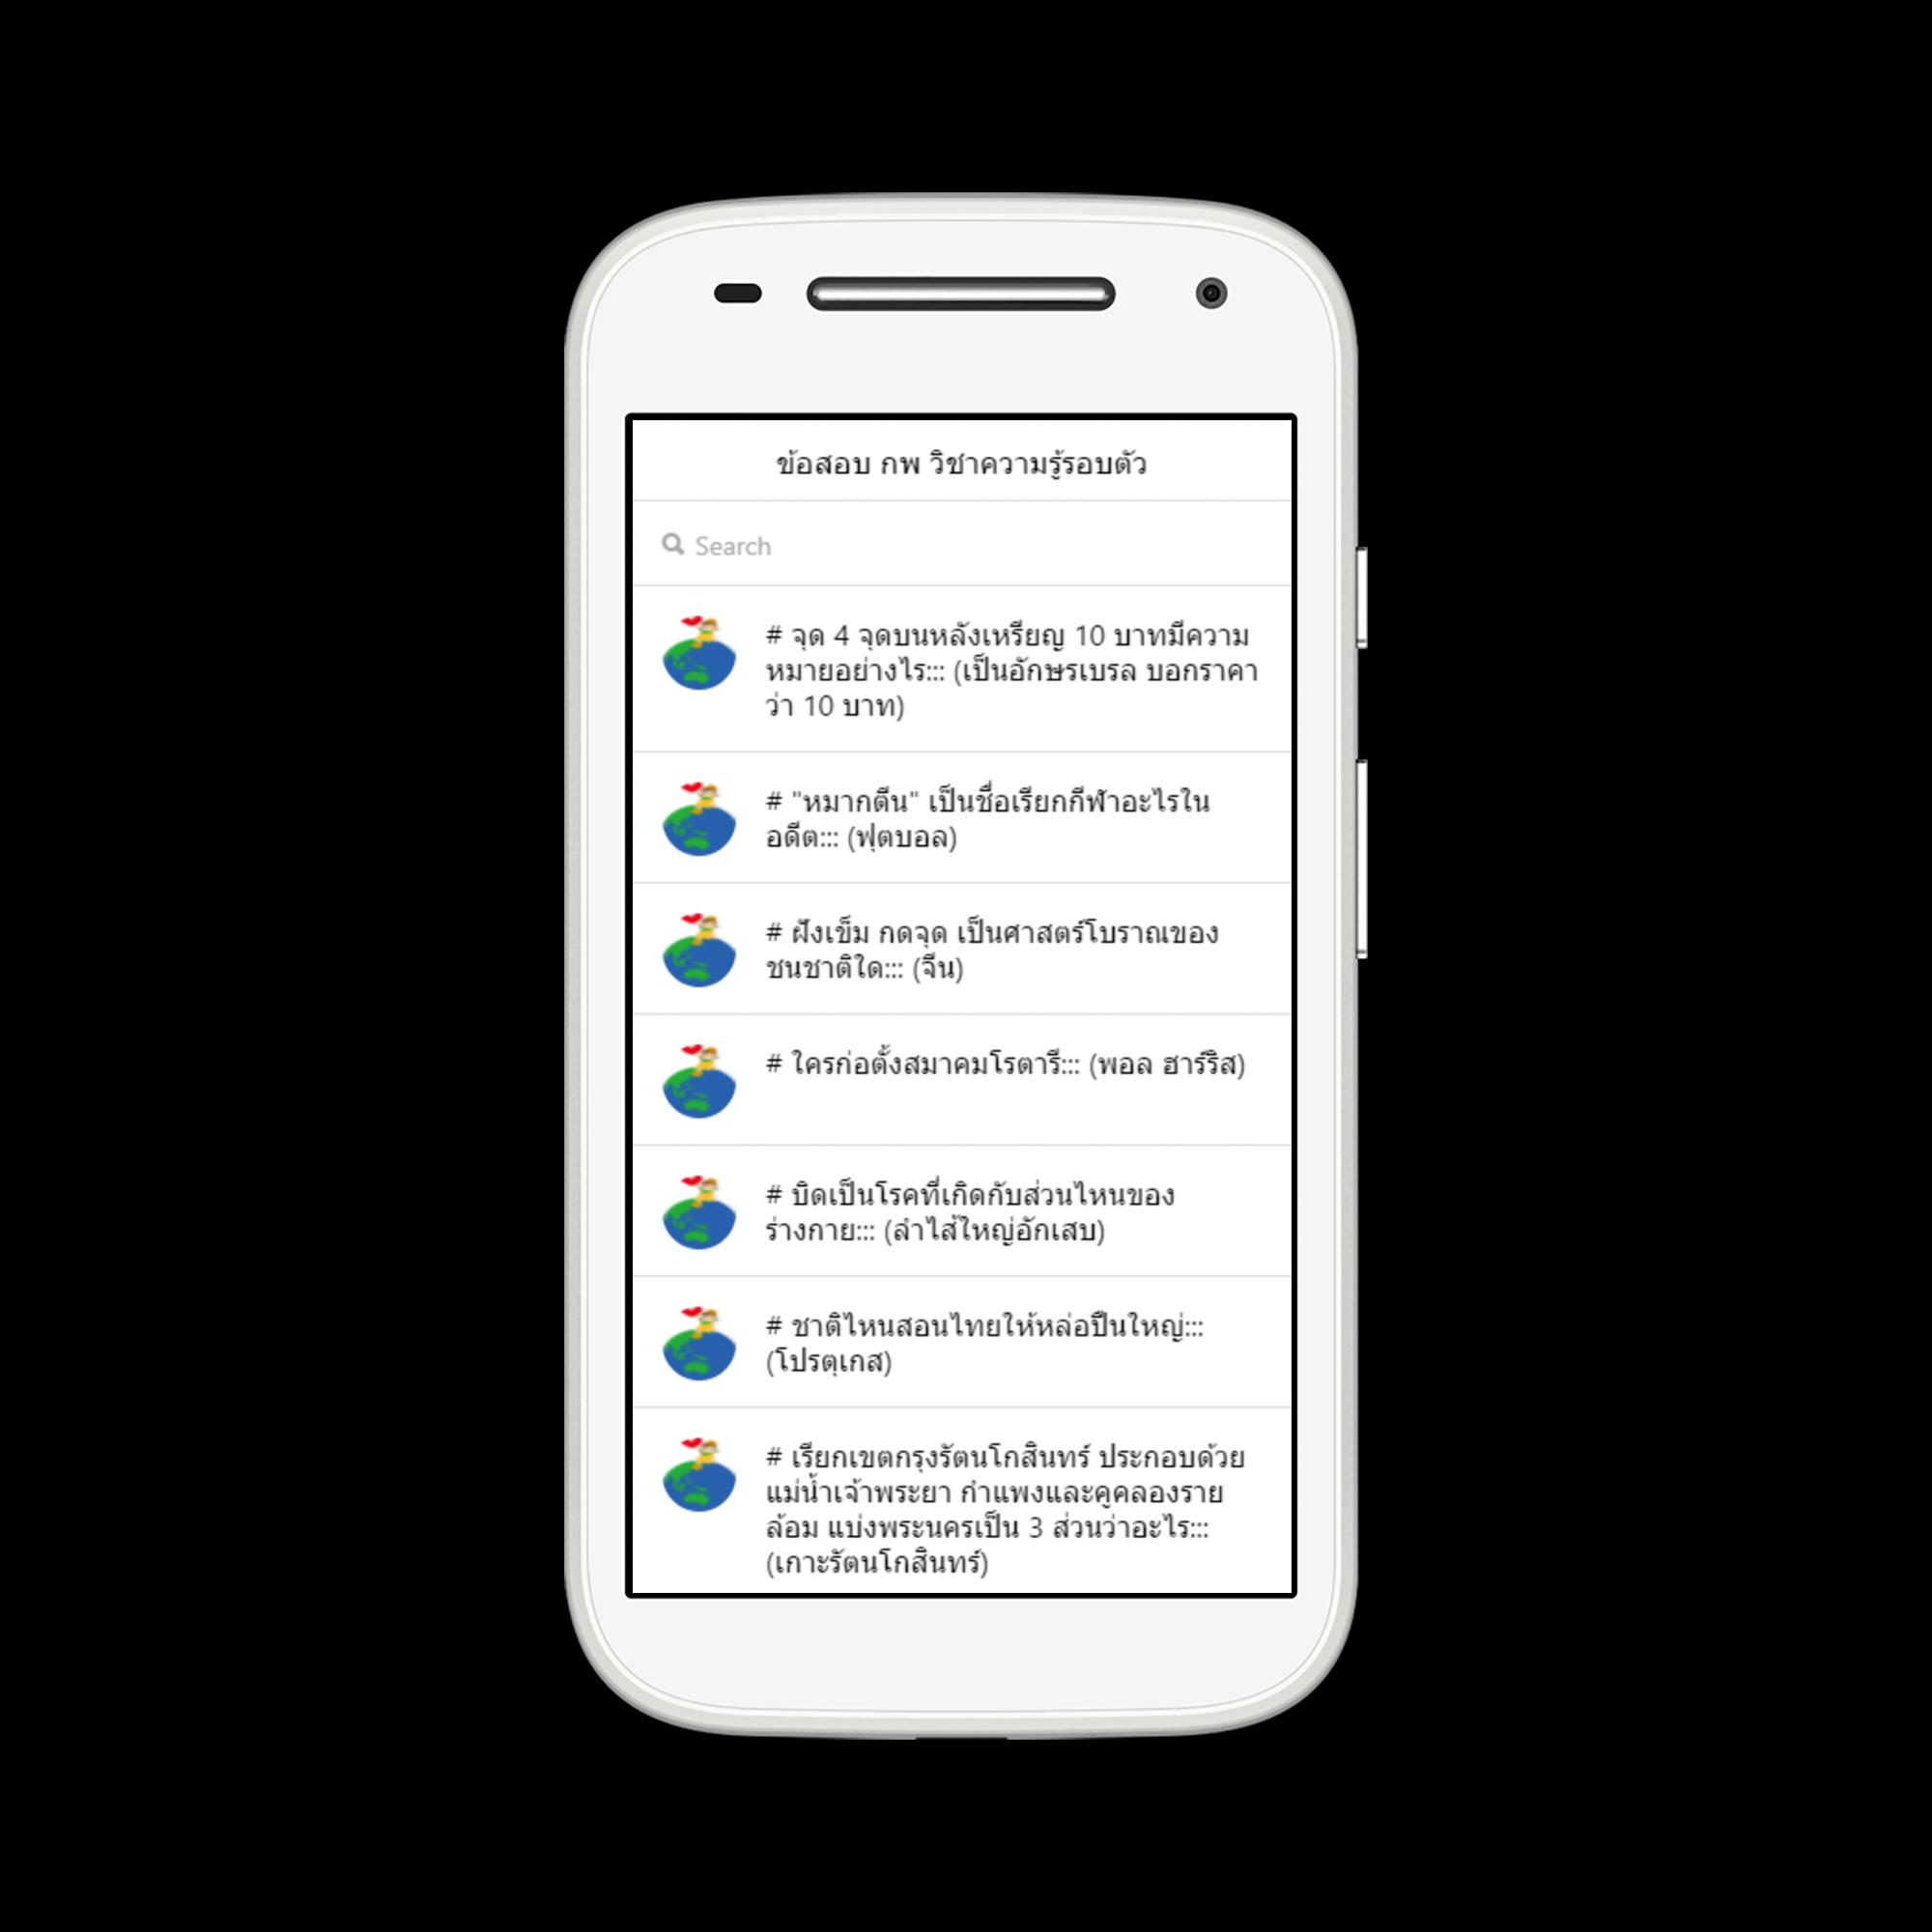 Android Icin แนวข อสอบ กพ ว ชาความร รอบต ว Apk Yi Indir - สอนพ มพ ภาษาไทยใน roblox 2019 ได ท กฟอนต youtube